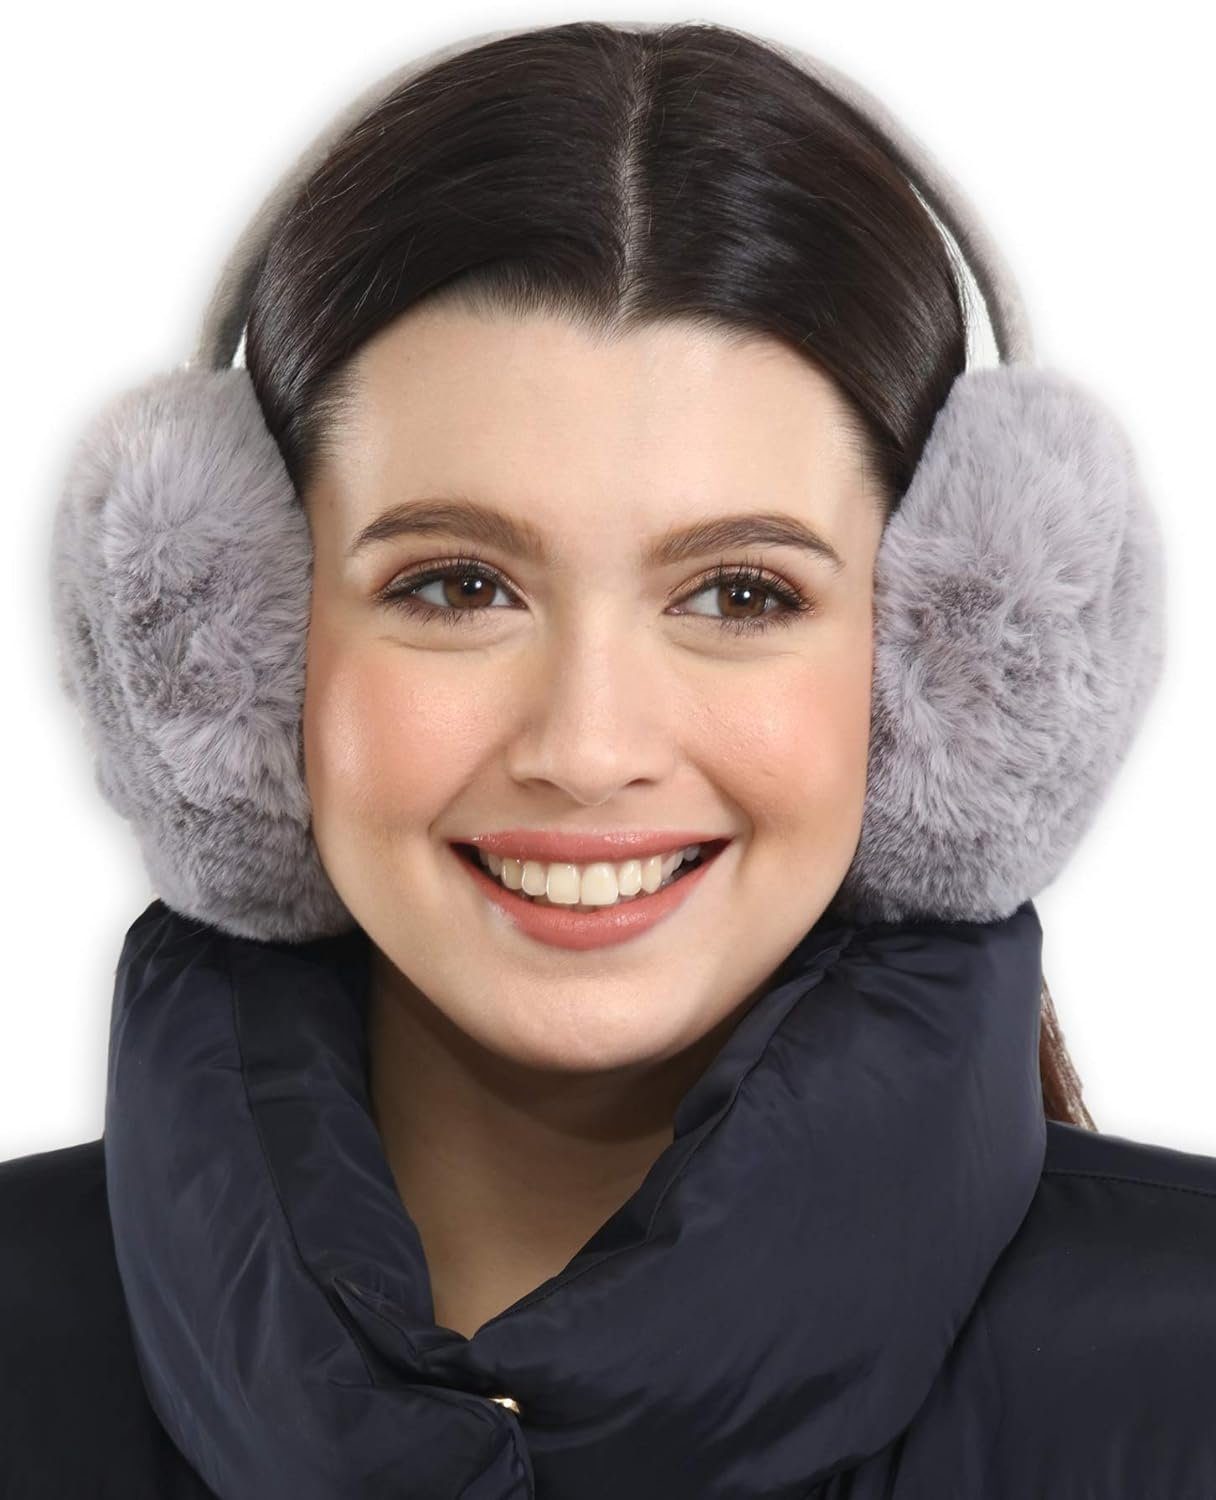 Opspring Ohrenwärmer Ohrenschützer,Winter-Ohrenwärmer,Ohrenschützer für kaltes Wetter Grau